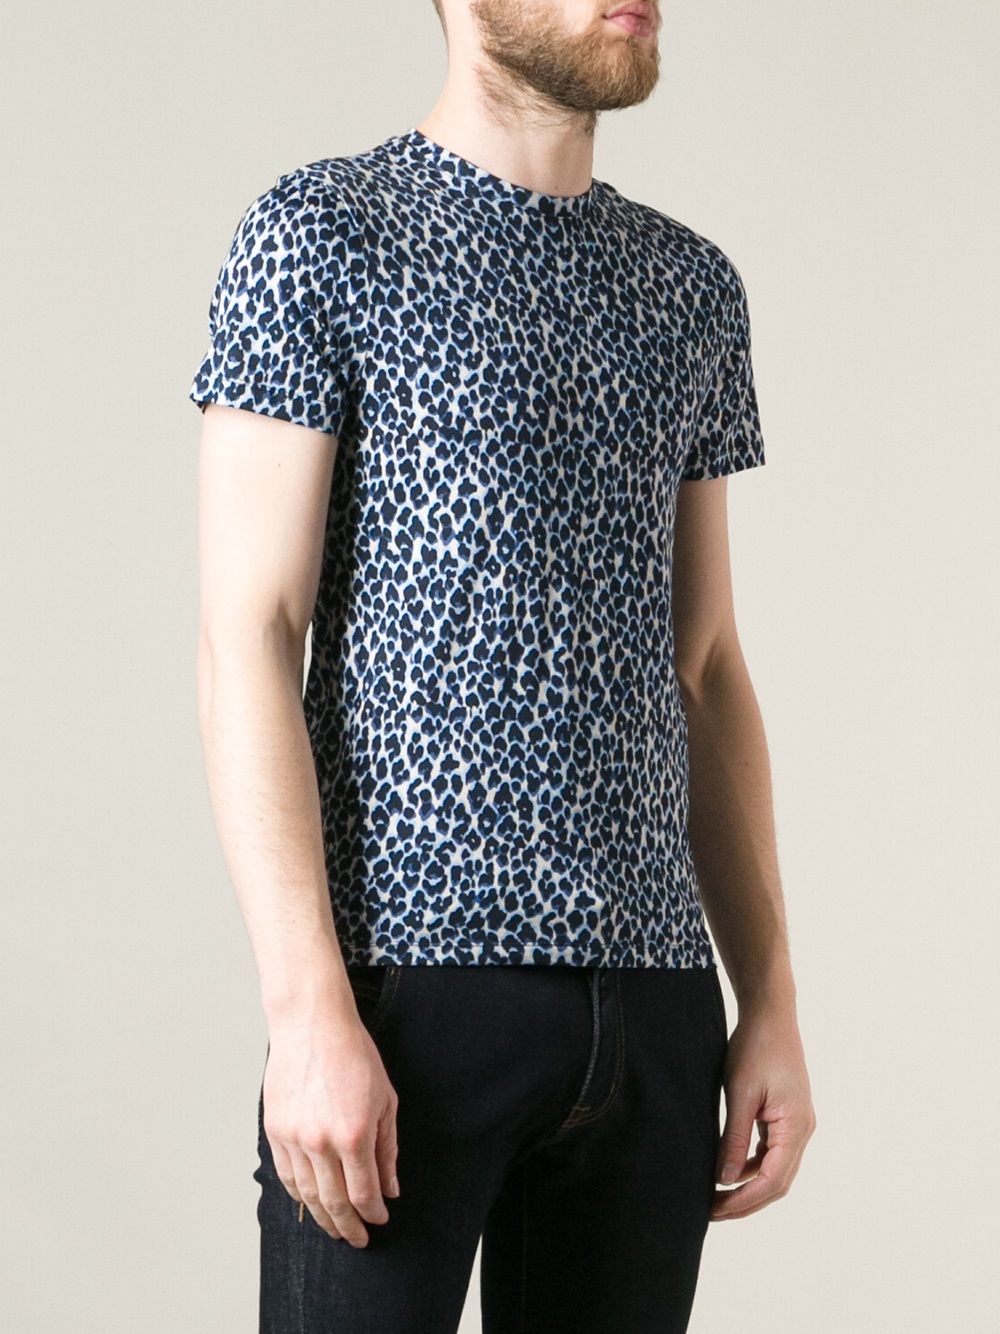 Moncler Leopard Print T-Shirt in Blue for Men - Lyst